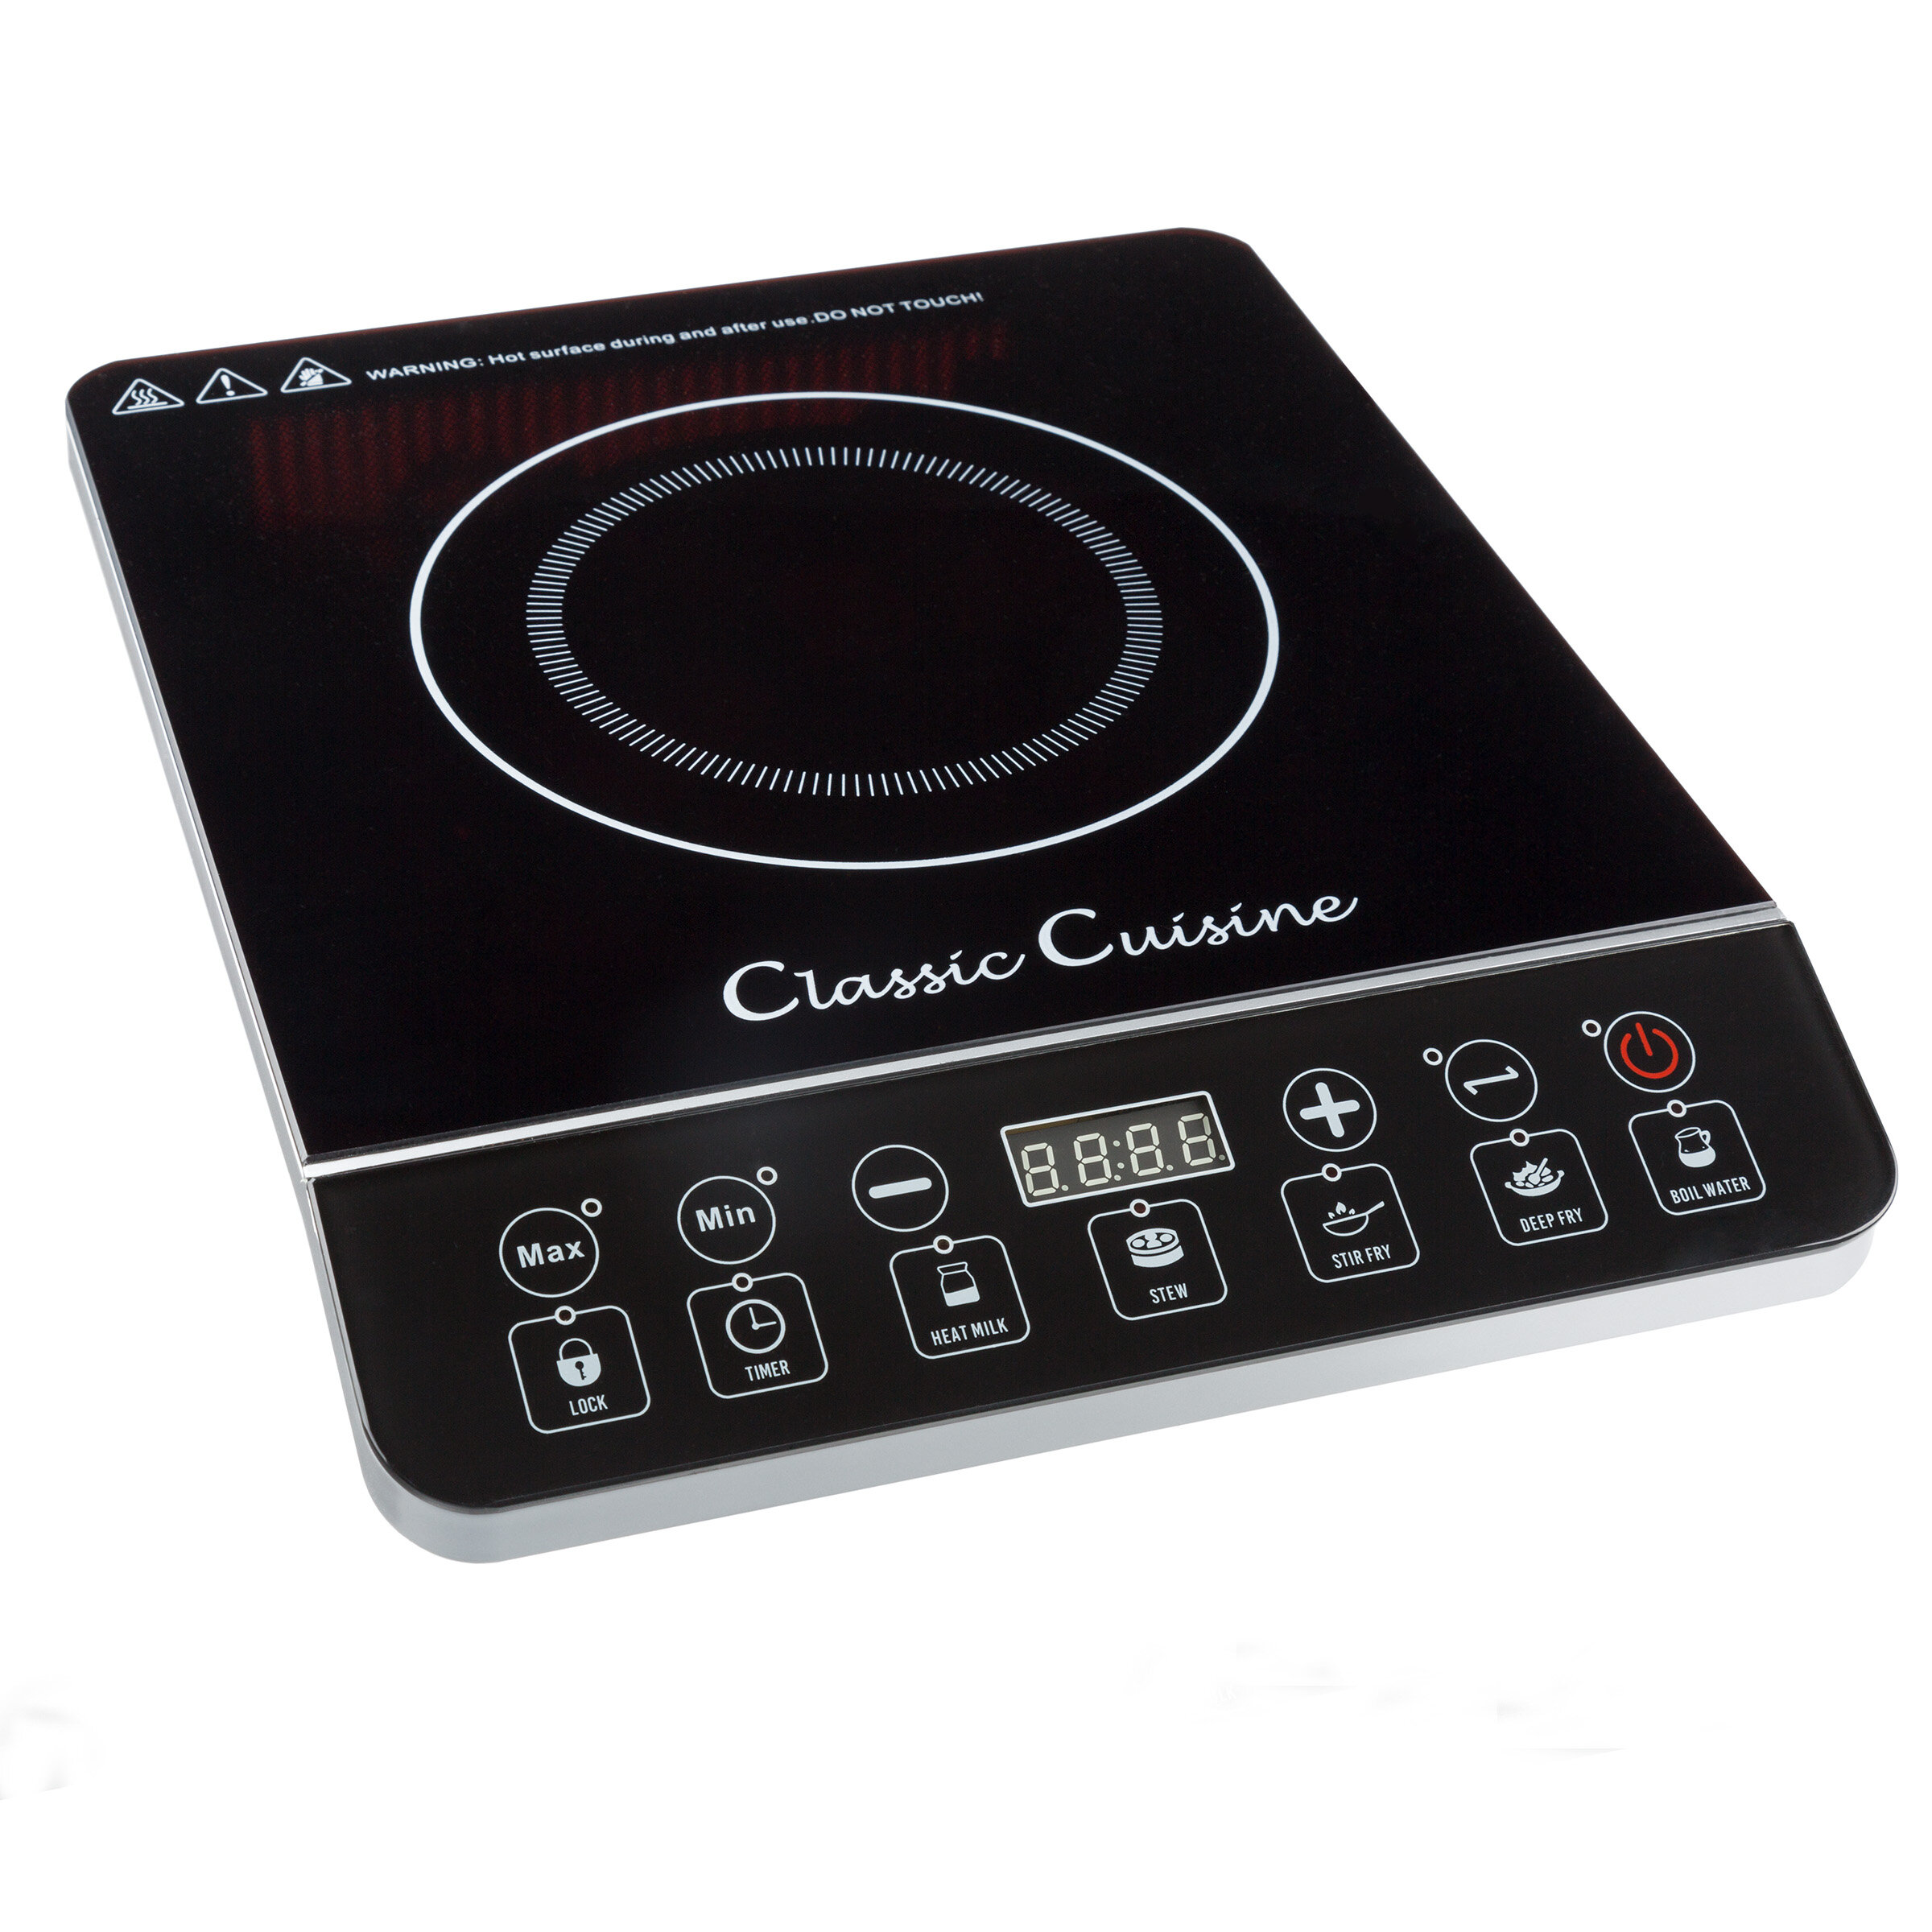 Cuisinart ICT-60 Black Double Induction Cooktop